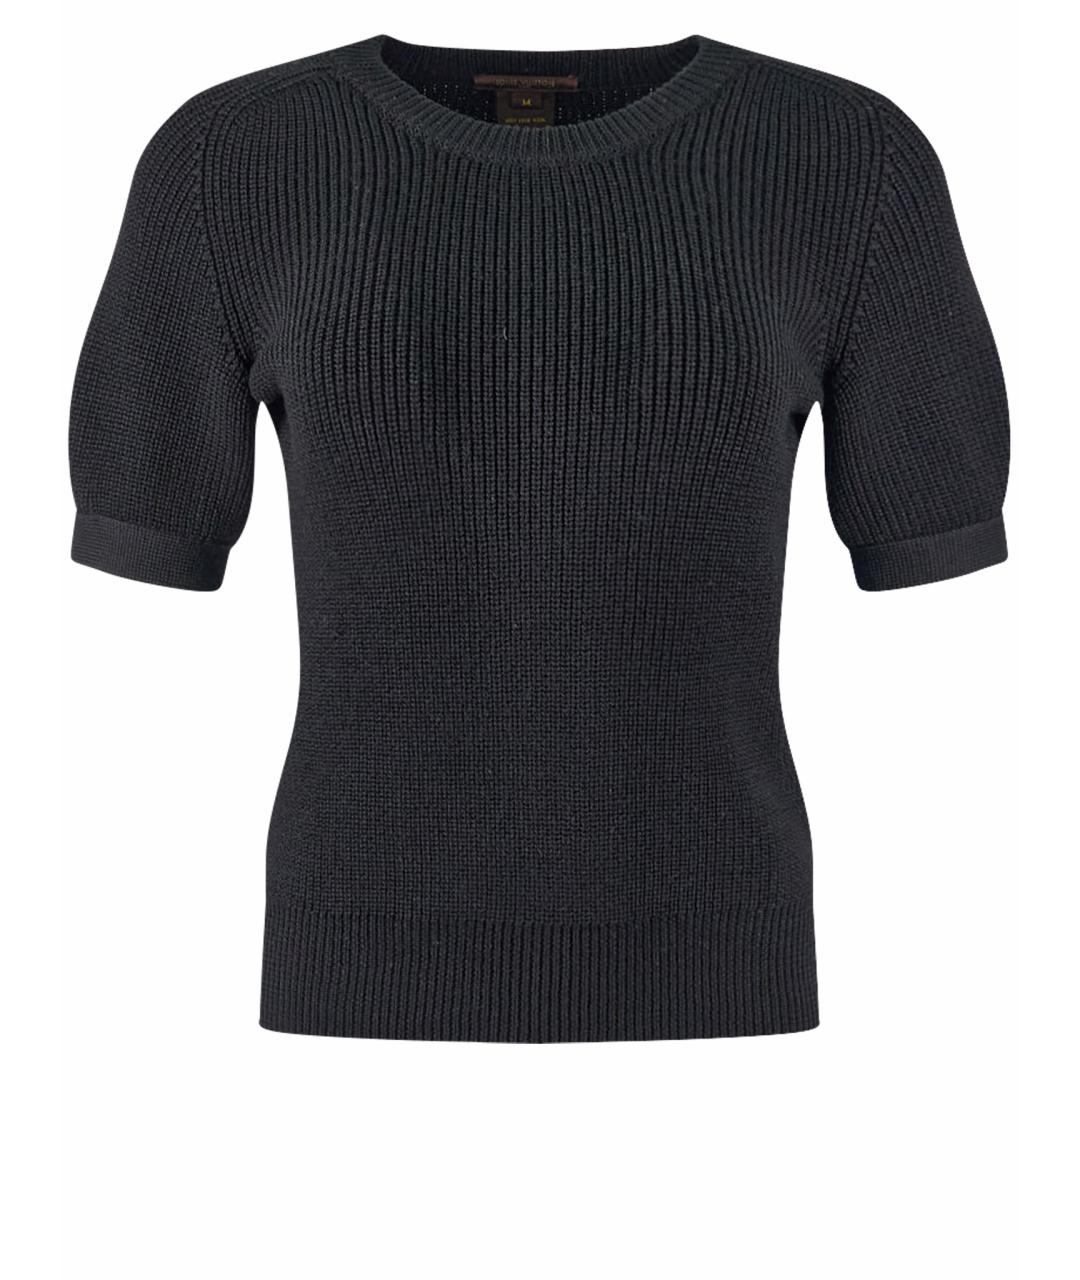 LOUIS VUITTON PRE-OWNED Черный шерстяной джемпер / свитер, фото 1